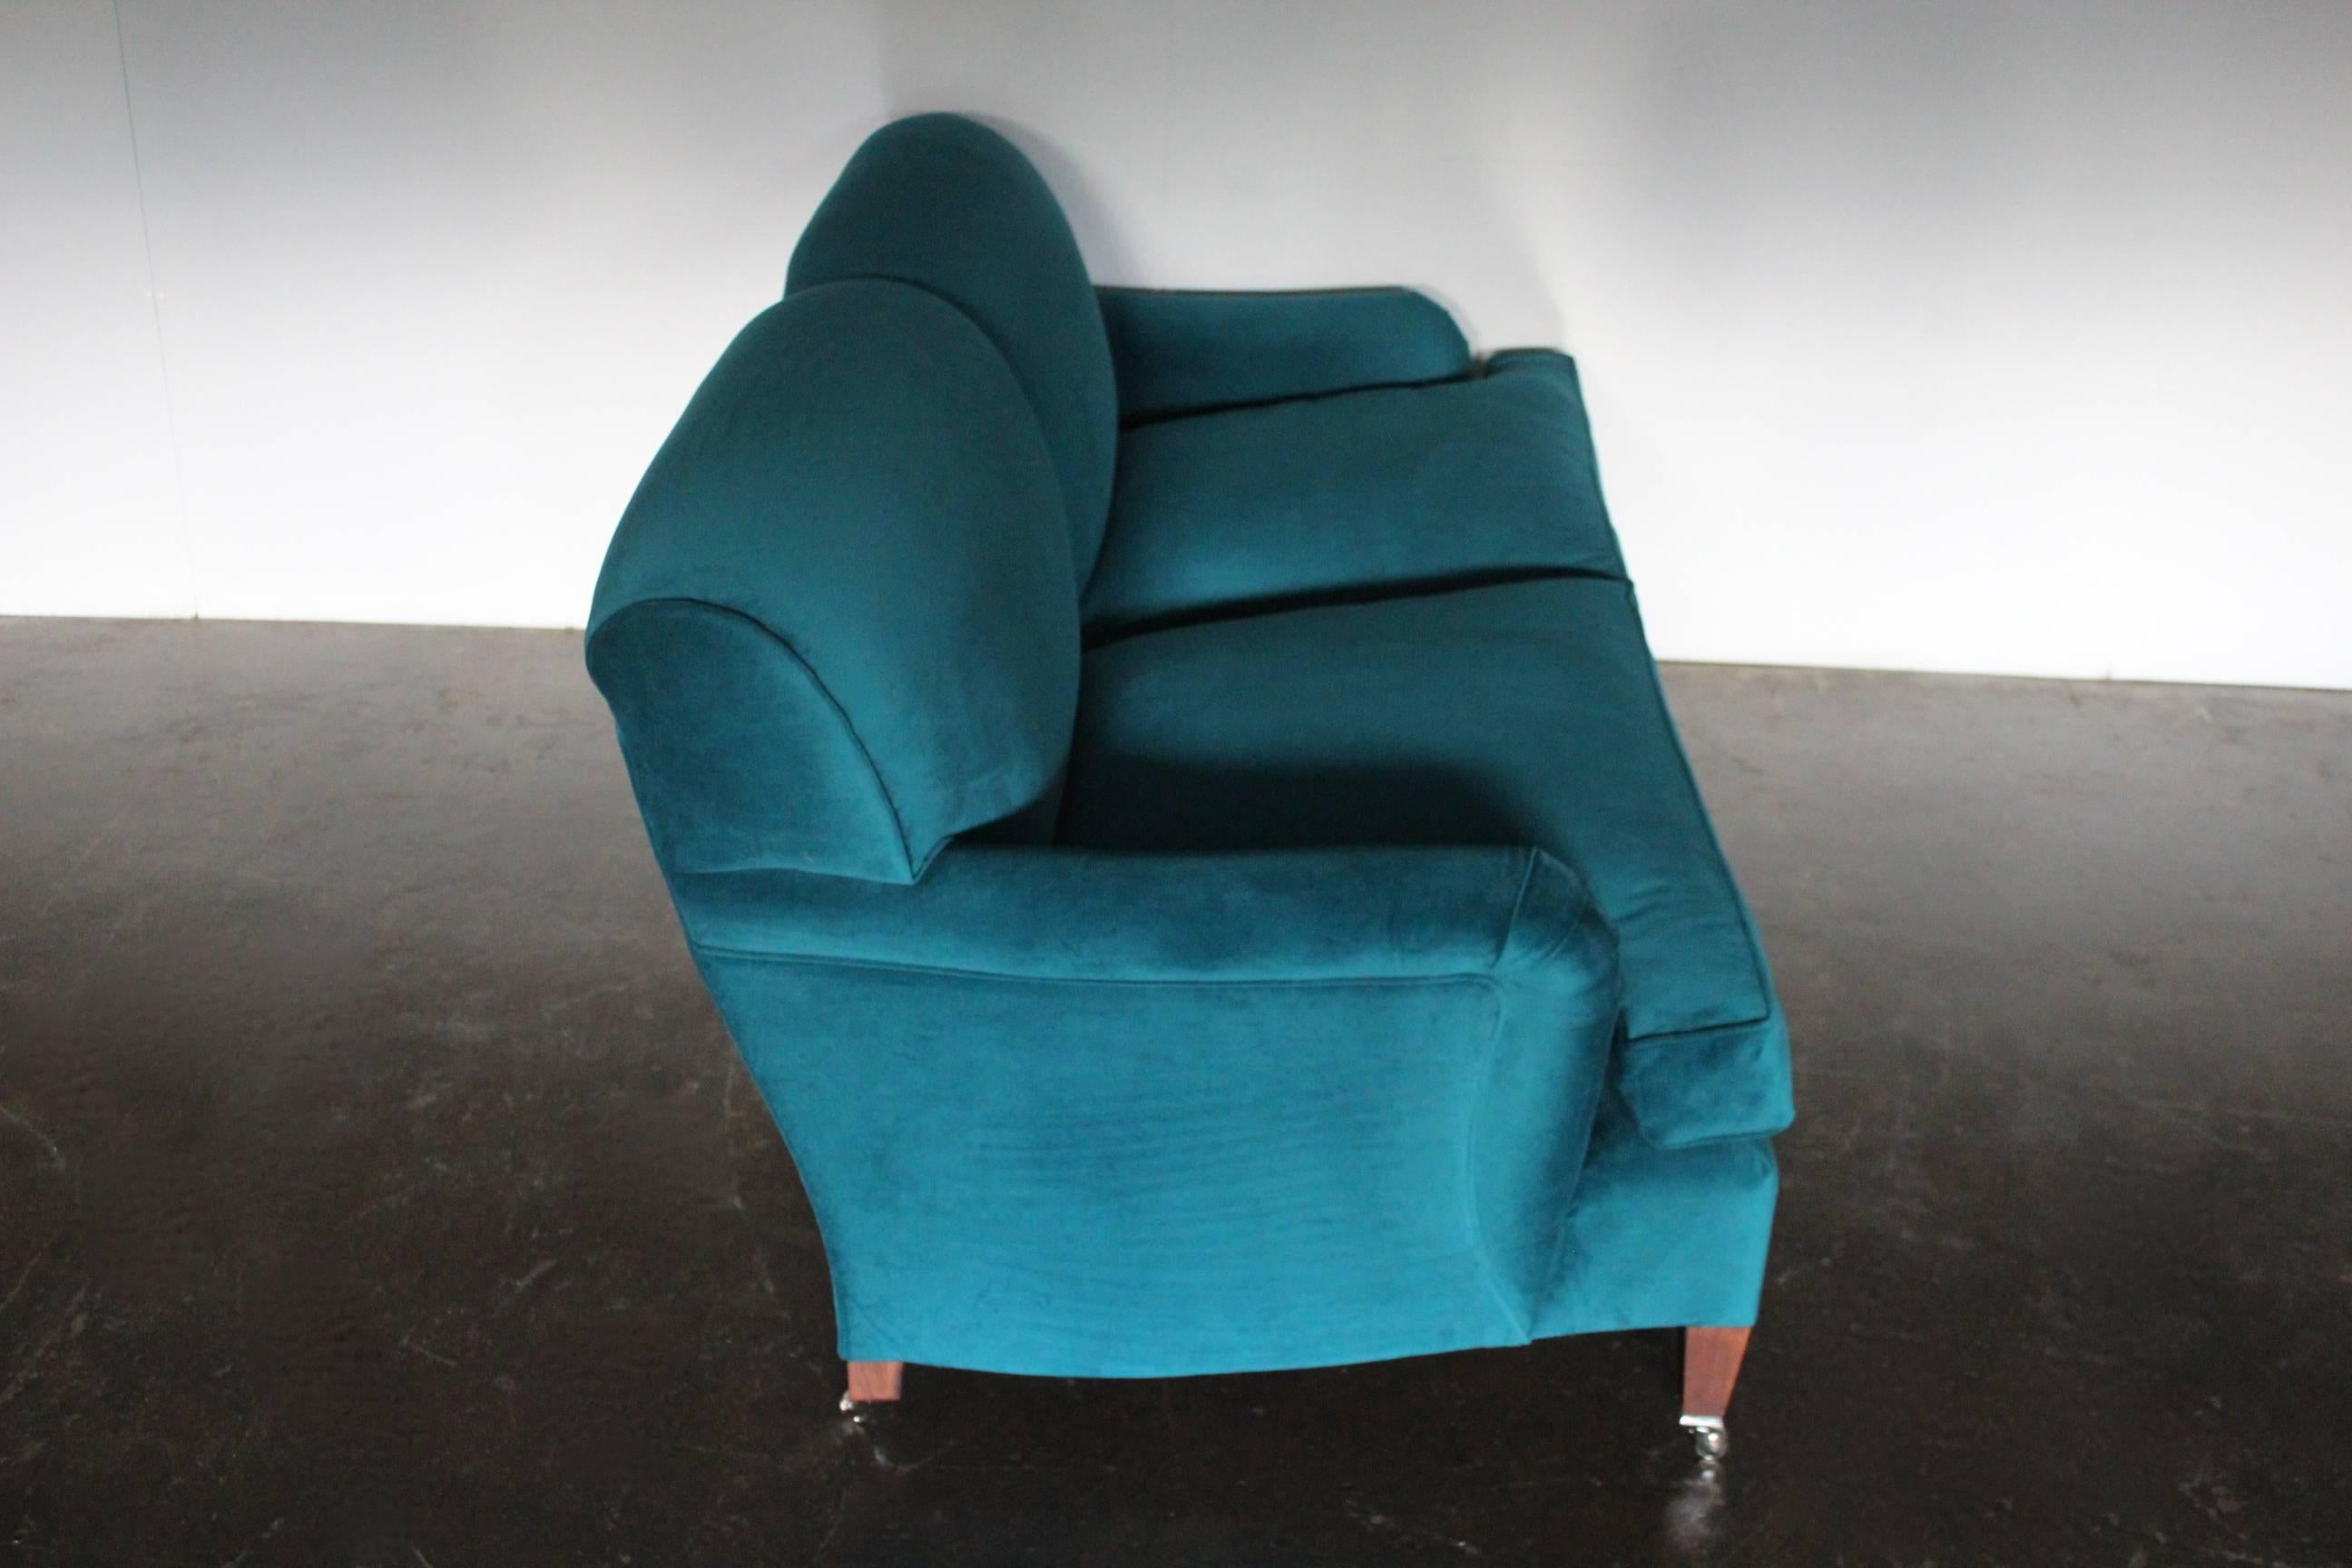 Edwardian George Smith Signature “Standard-Arm” Sofa in Teal Green Blue Velvet